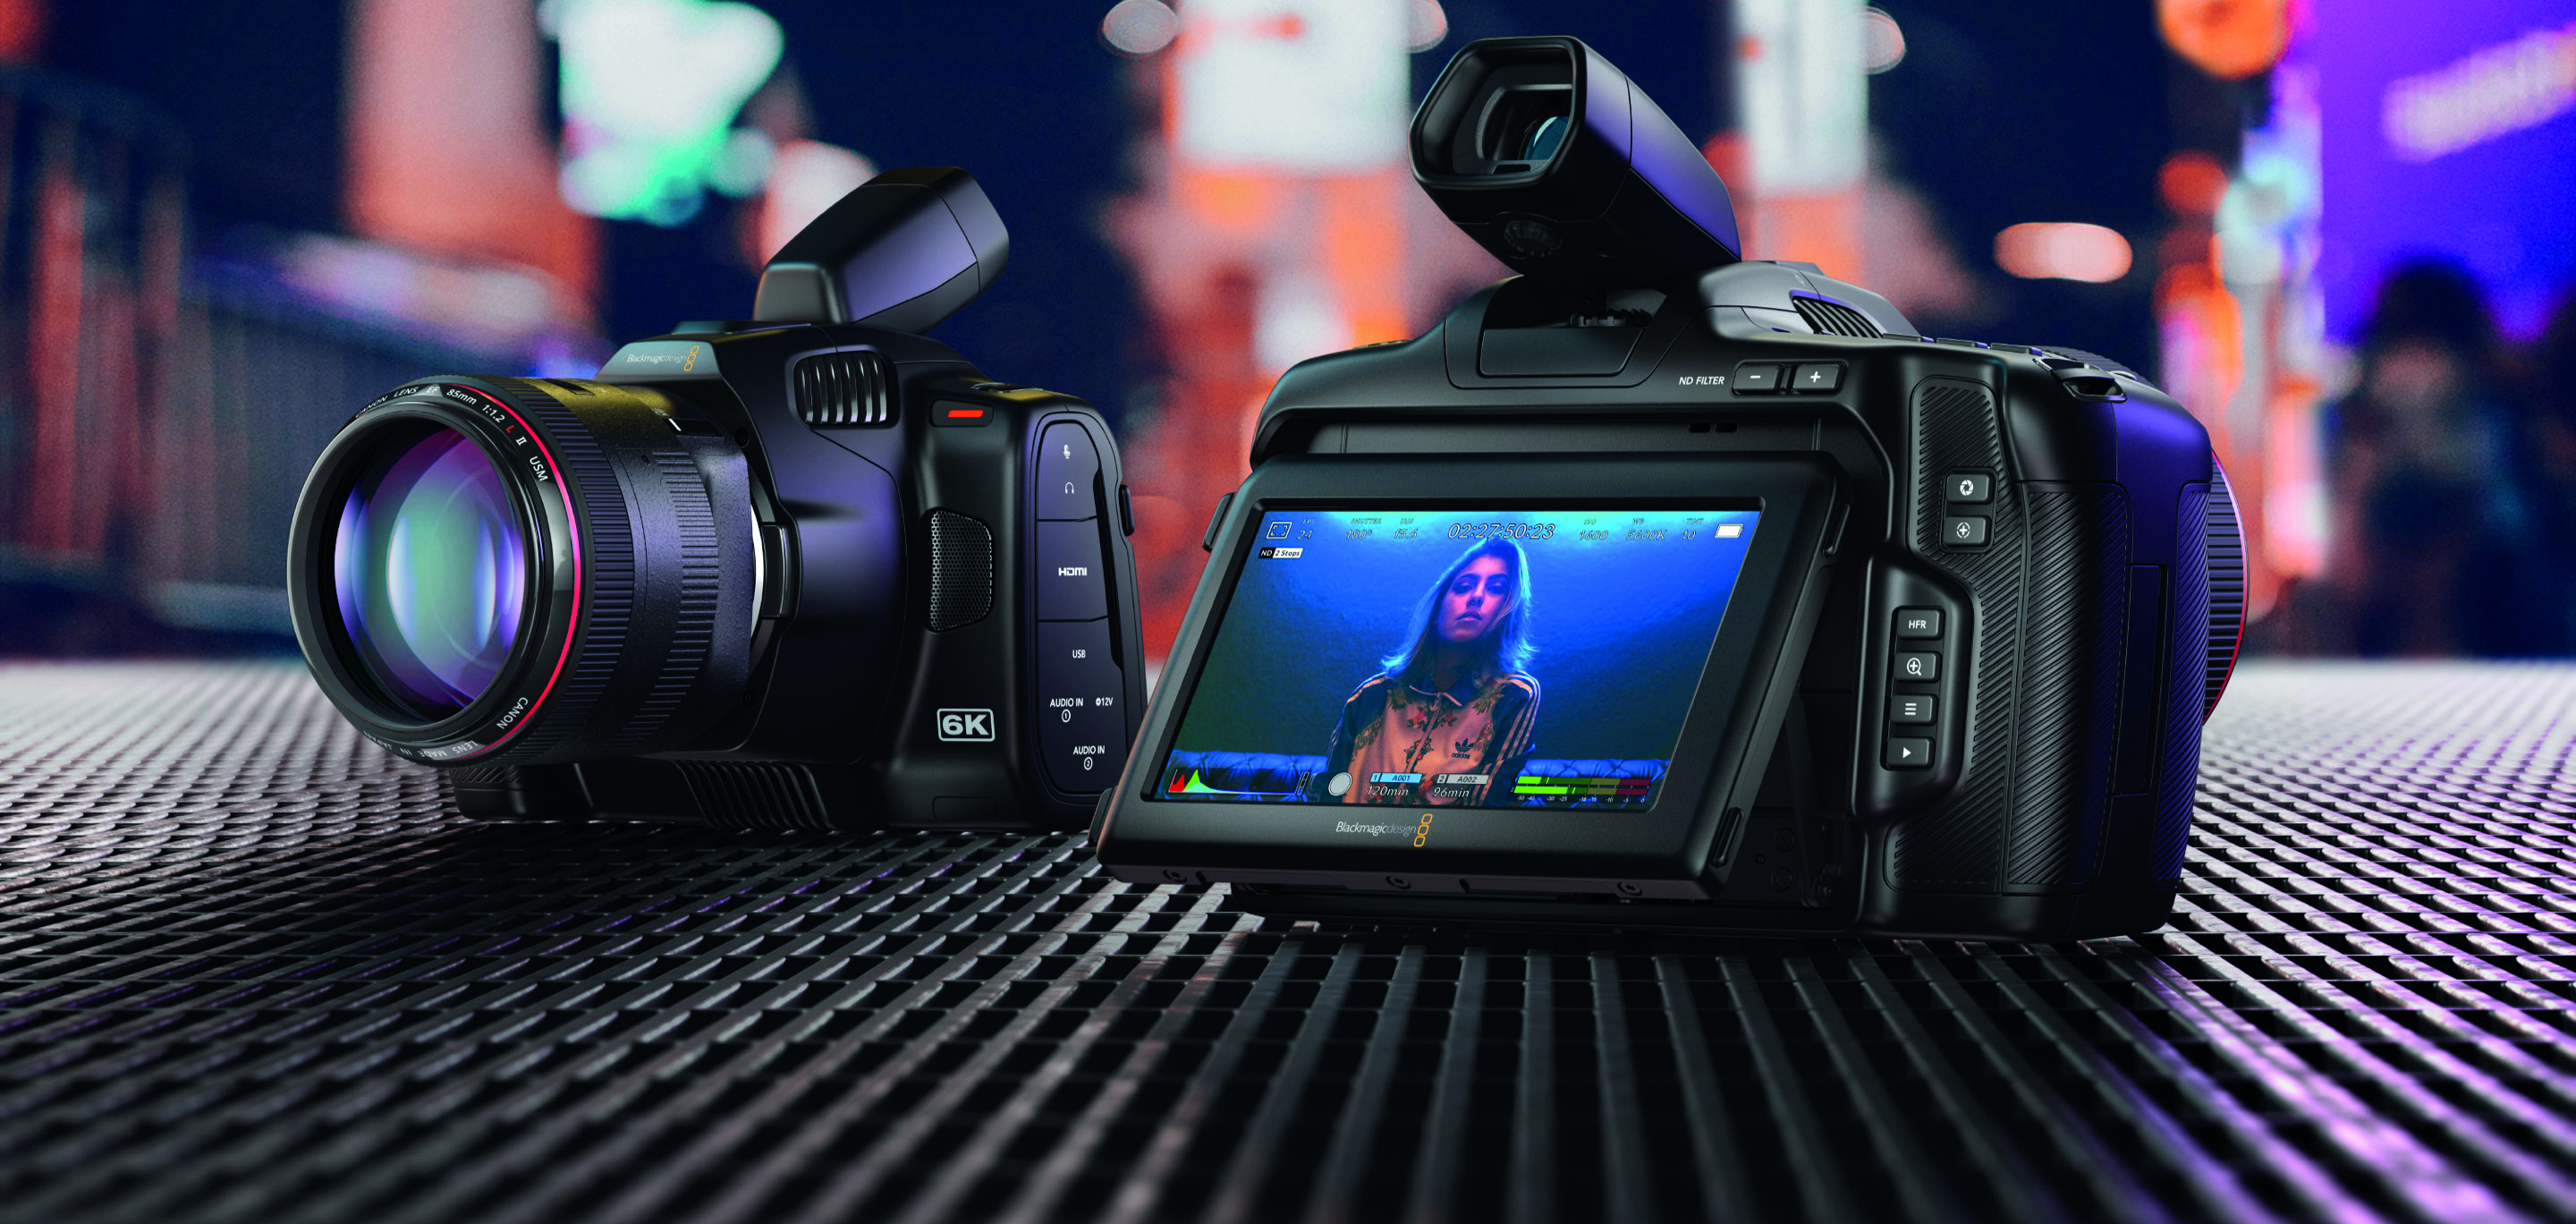 Blackmagic Design Pocket Cinema Camera 6K Pro- NEW - Allied